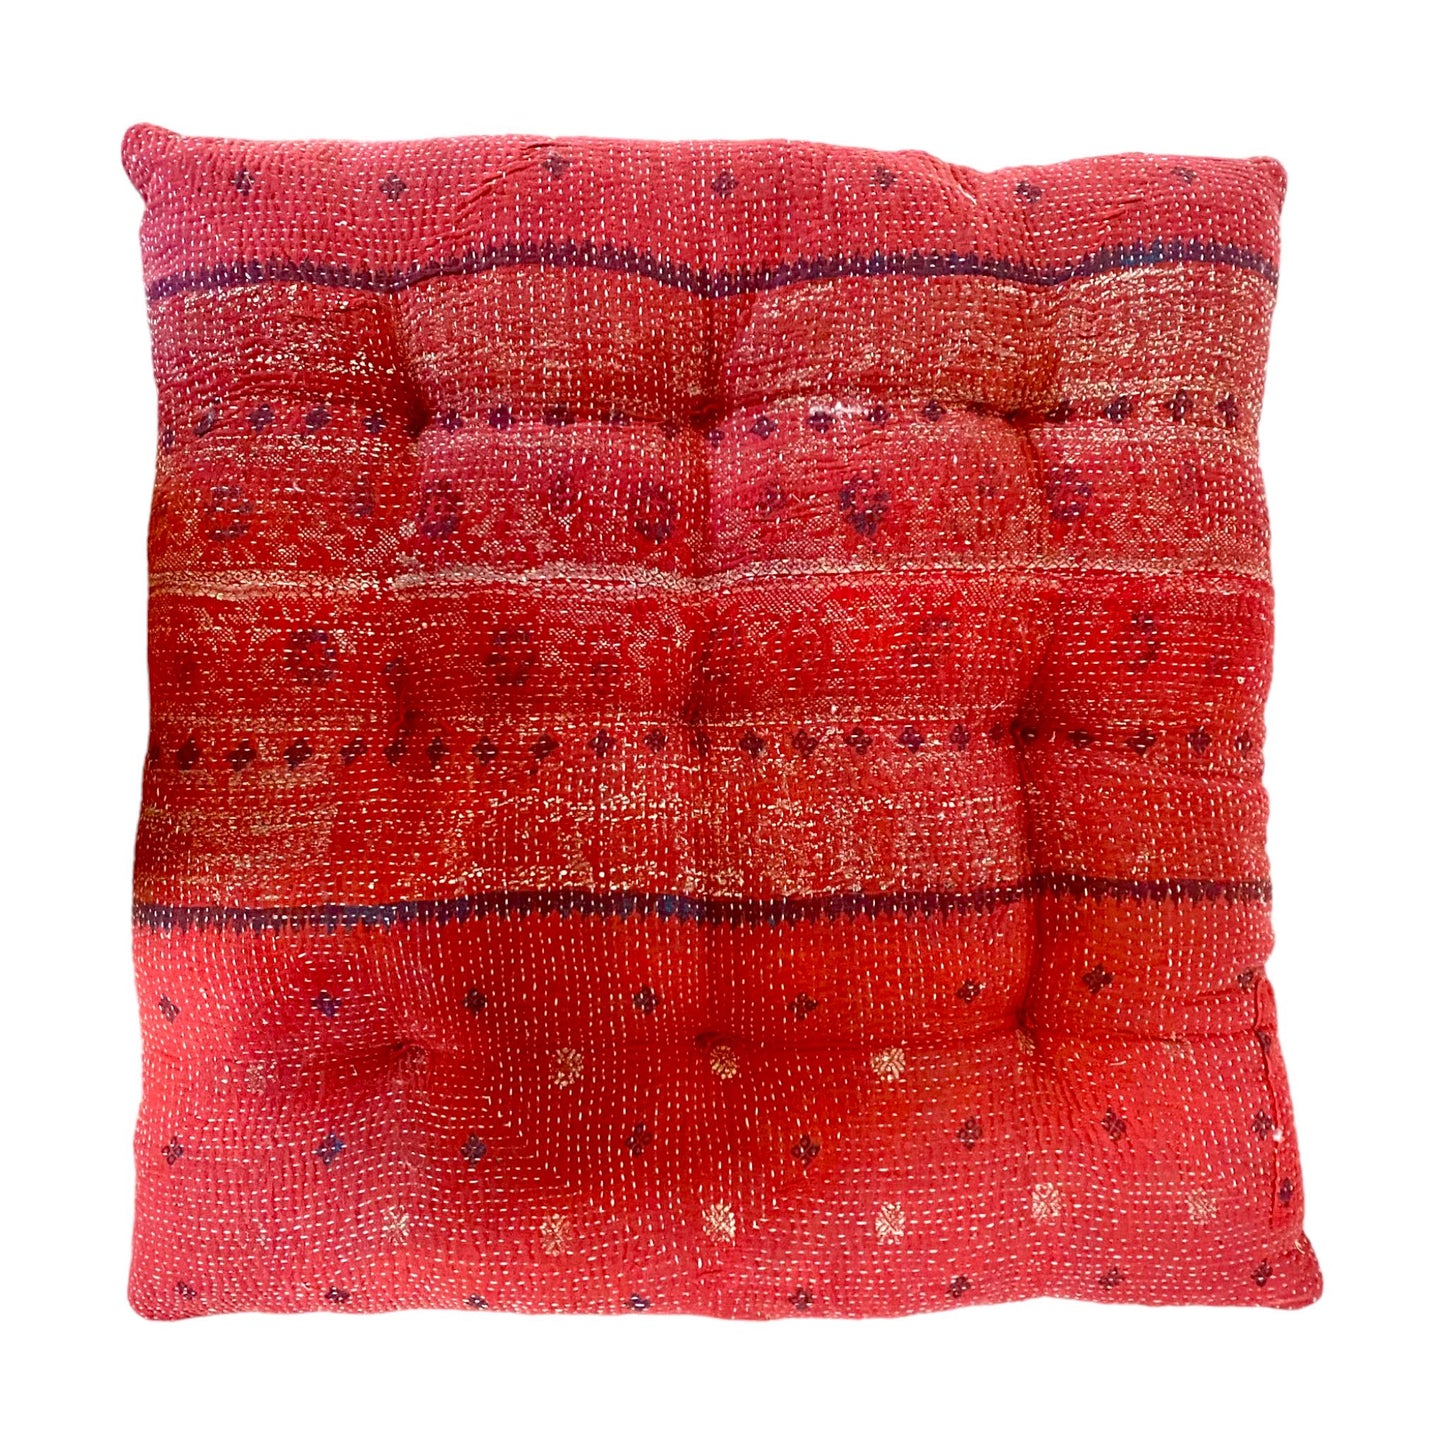 Raspberry kantha cushion